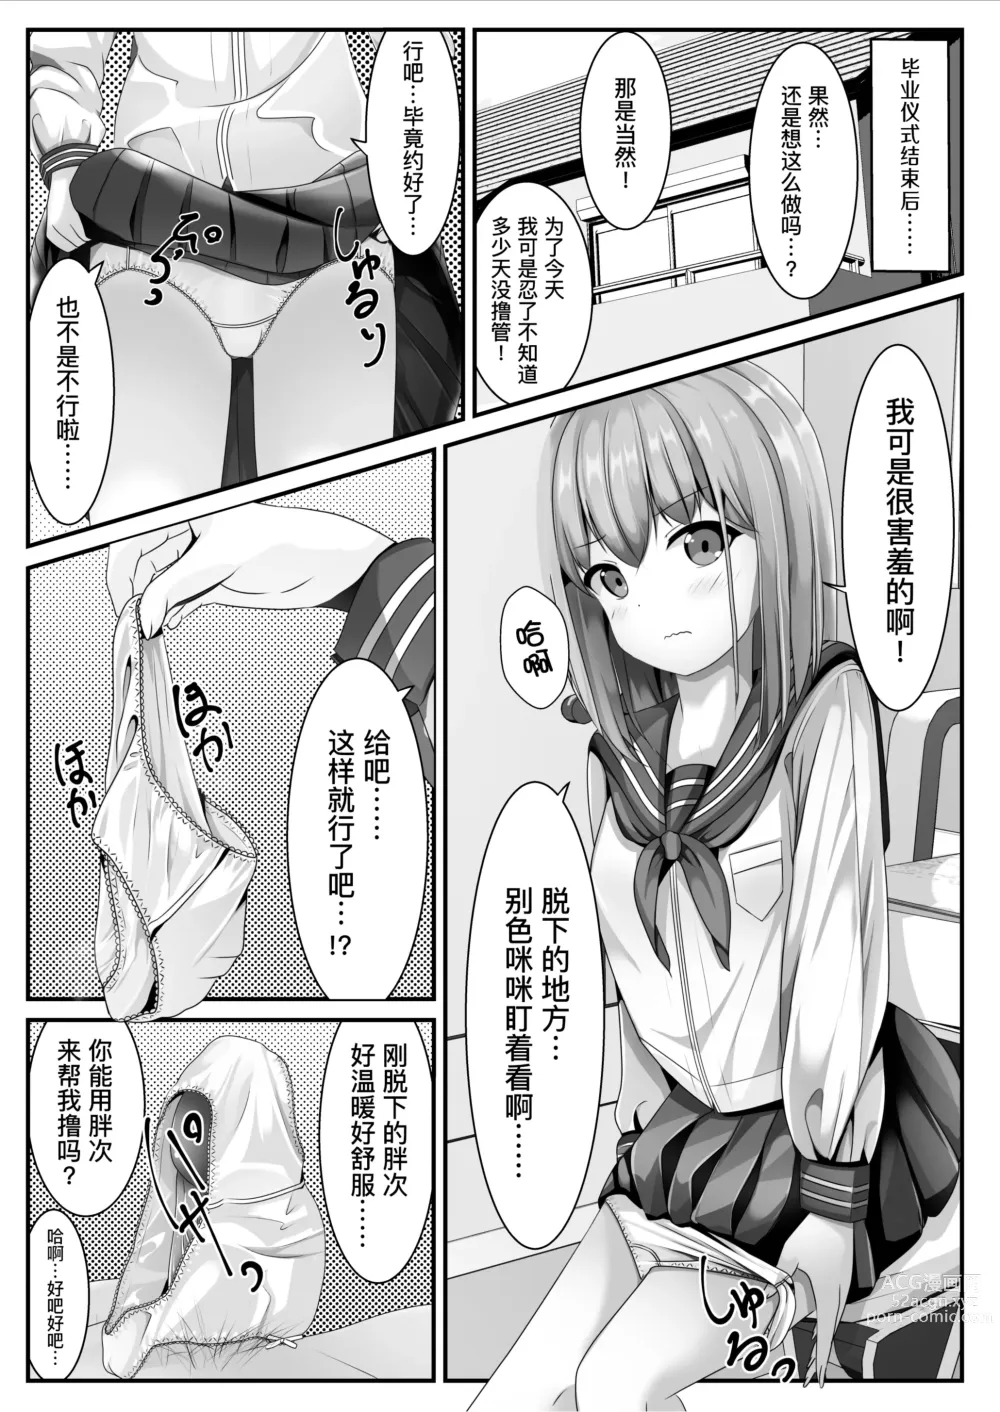 Page 4 of doujinshi 她说毕业之后可以把精液射在制服上